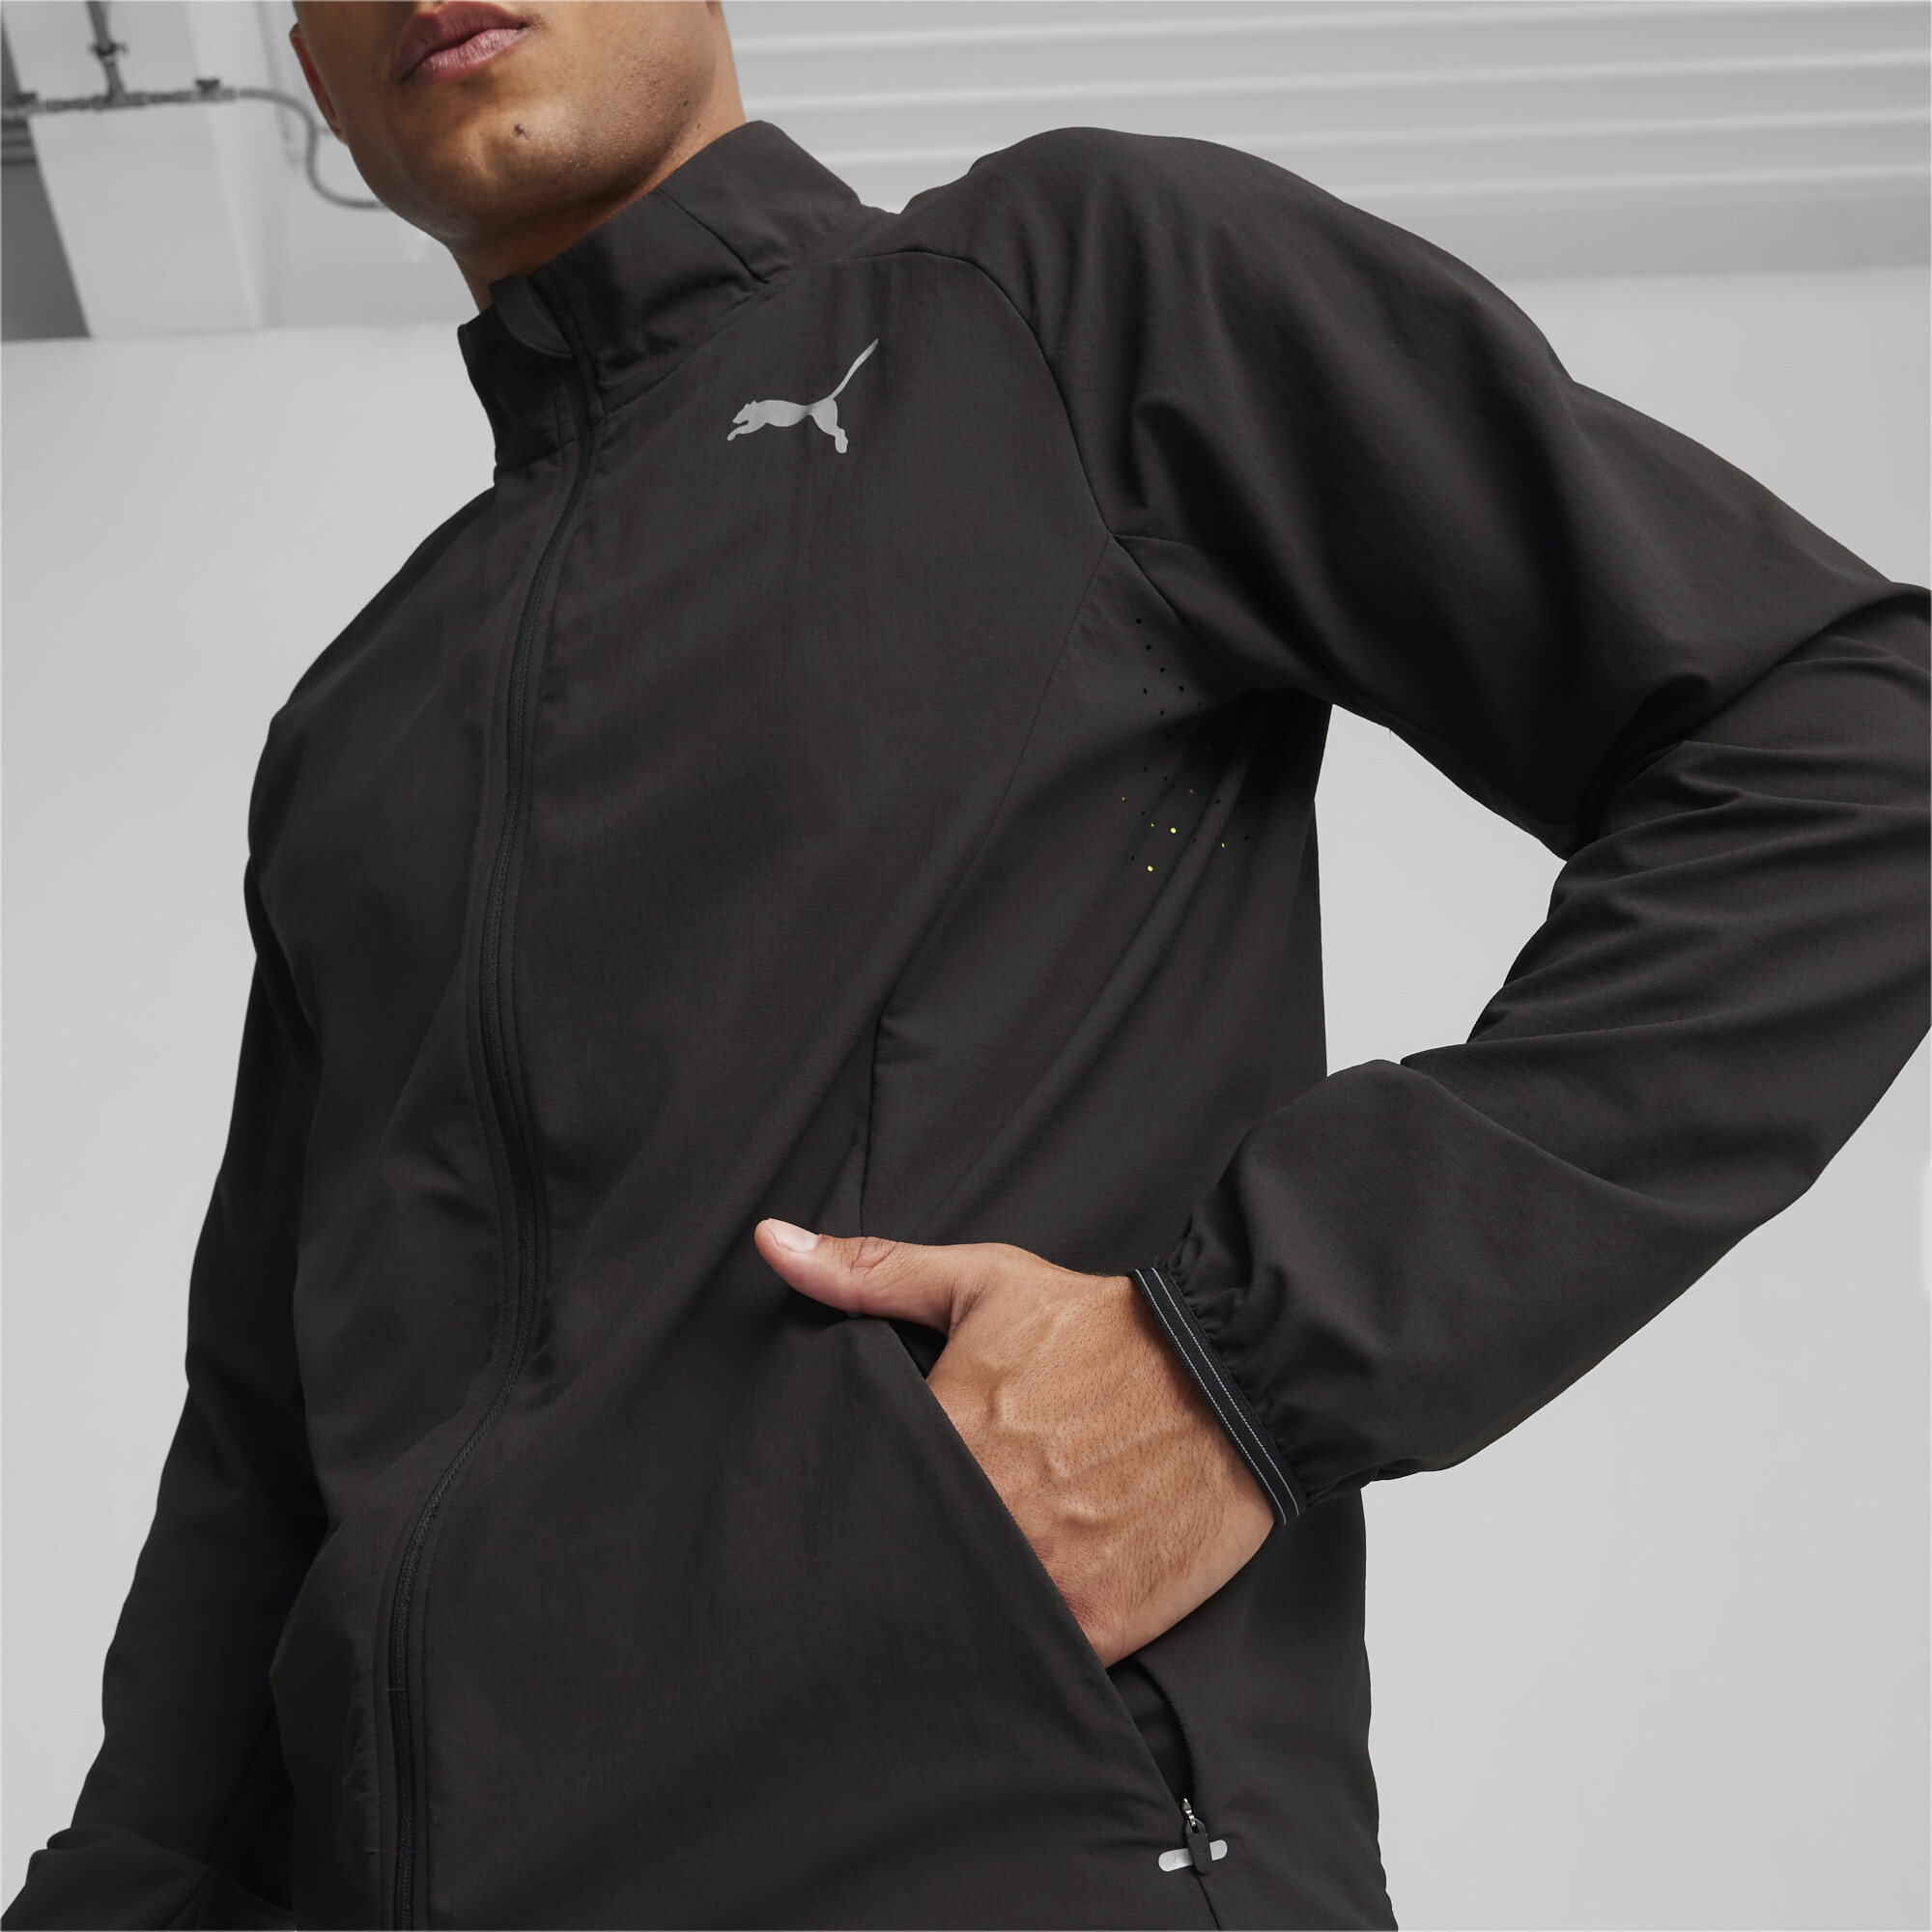 Men's PUMA RUN Elite Jacket In Black, Size XS